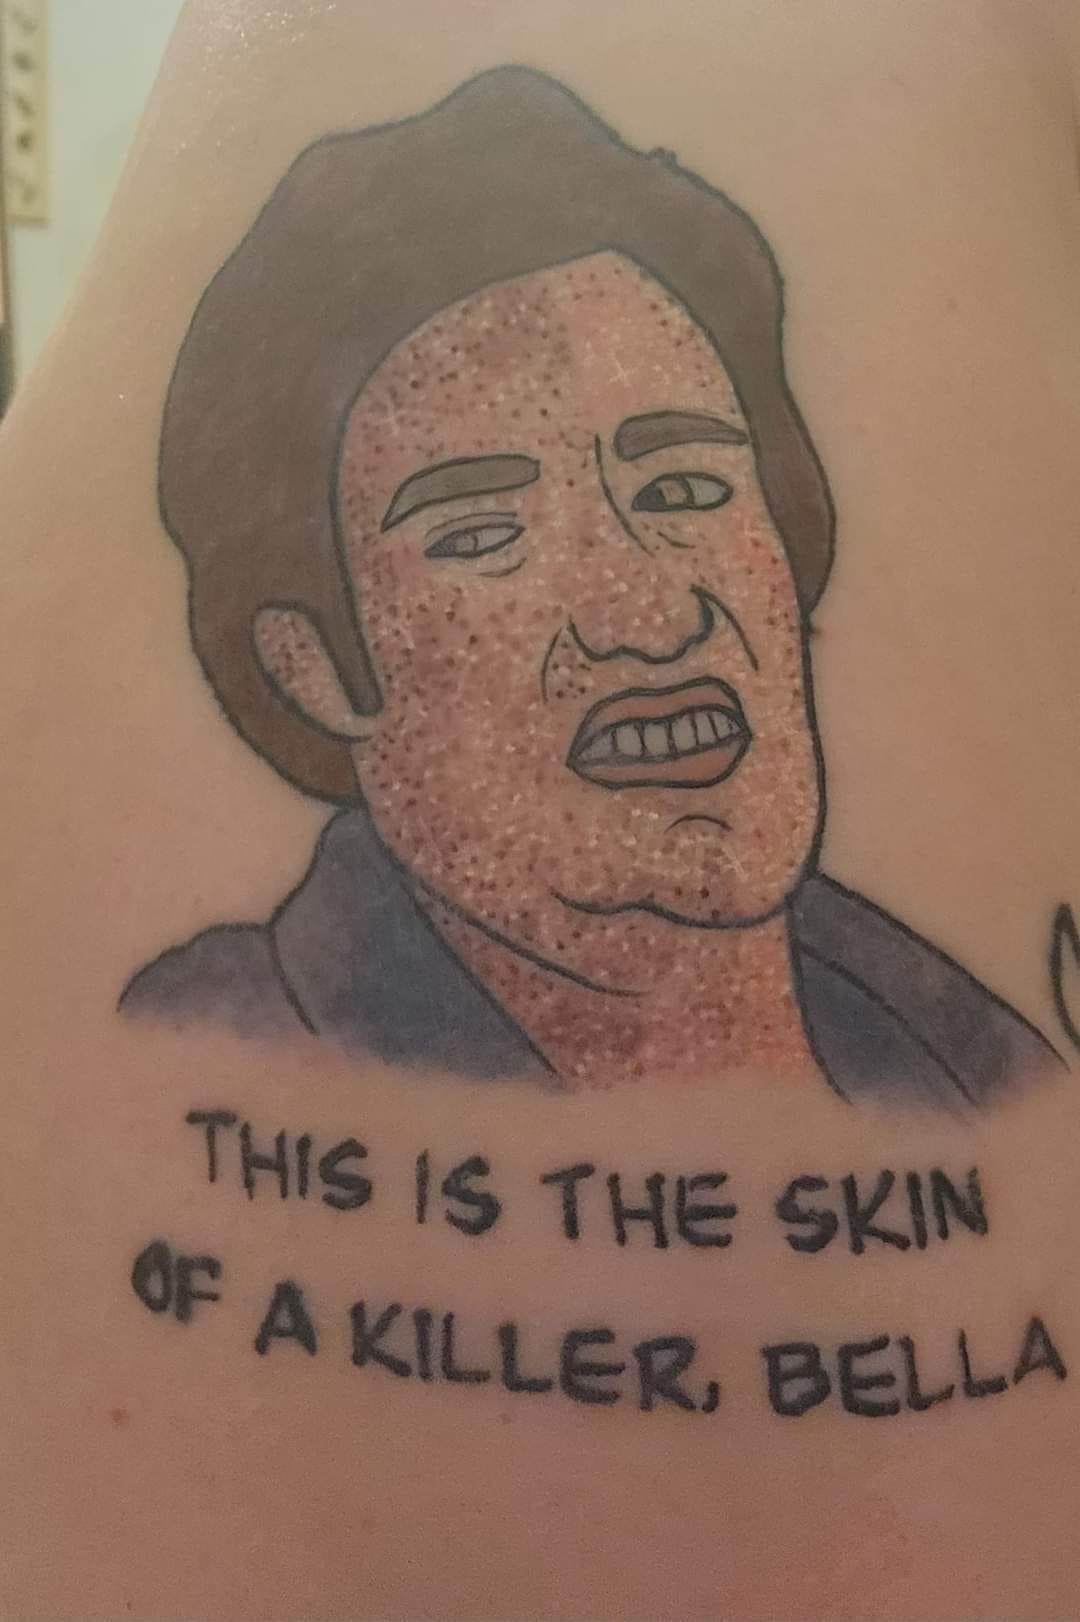 shitty tattoos